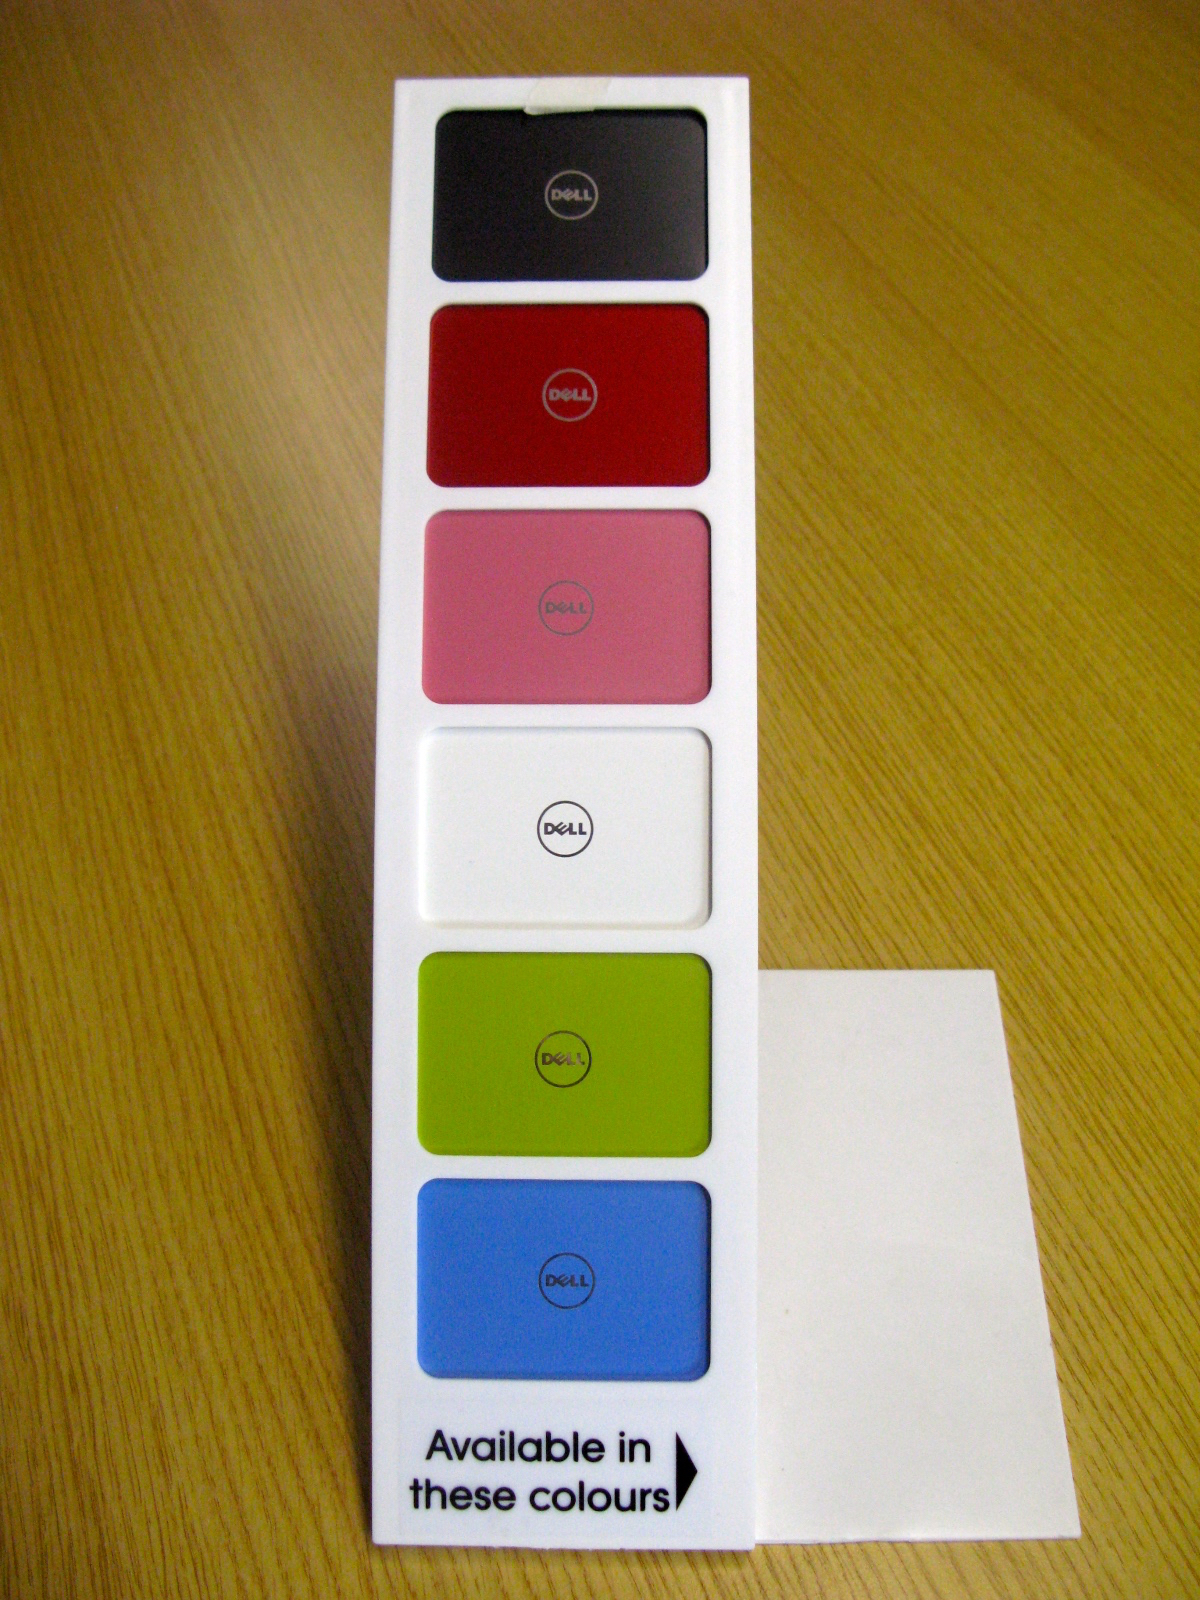 Dell Laptop Colour Picker